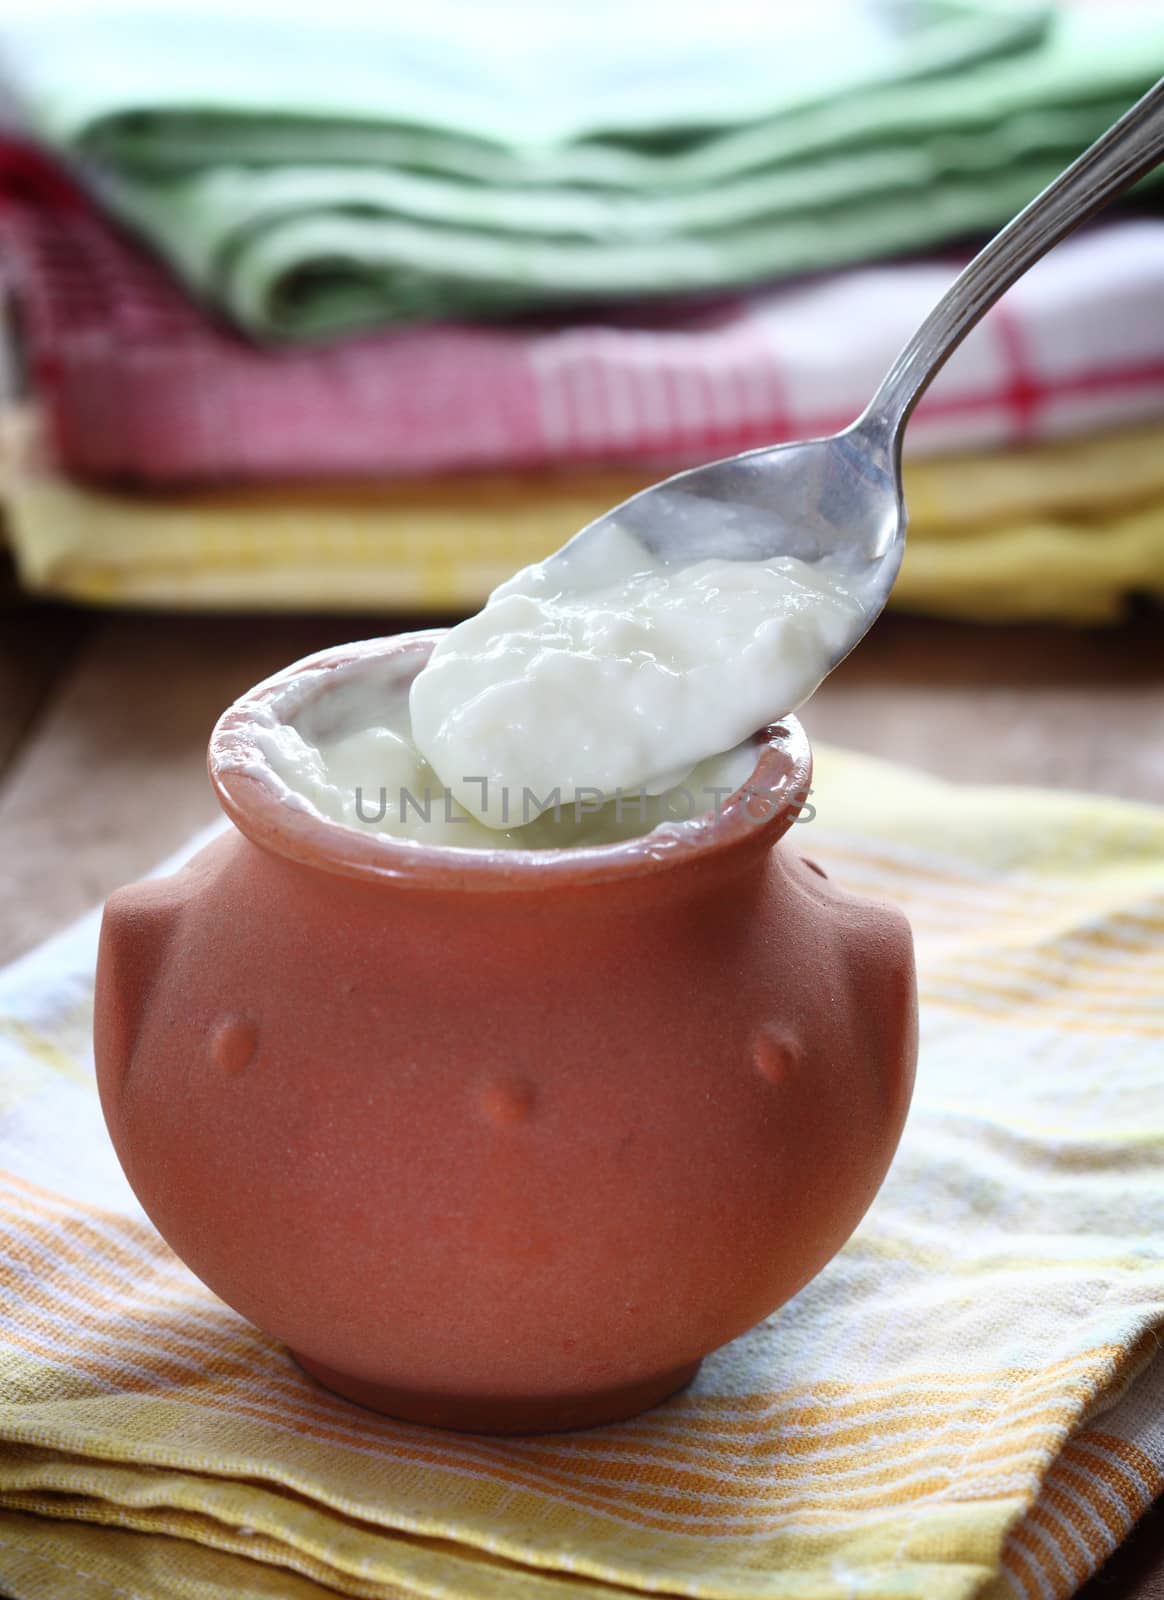 Homemade yogurt in a ceramic pot and spoon